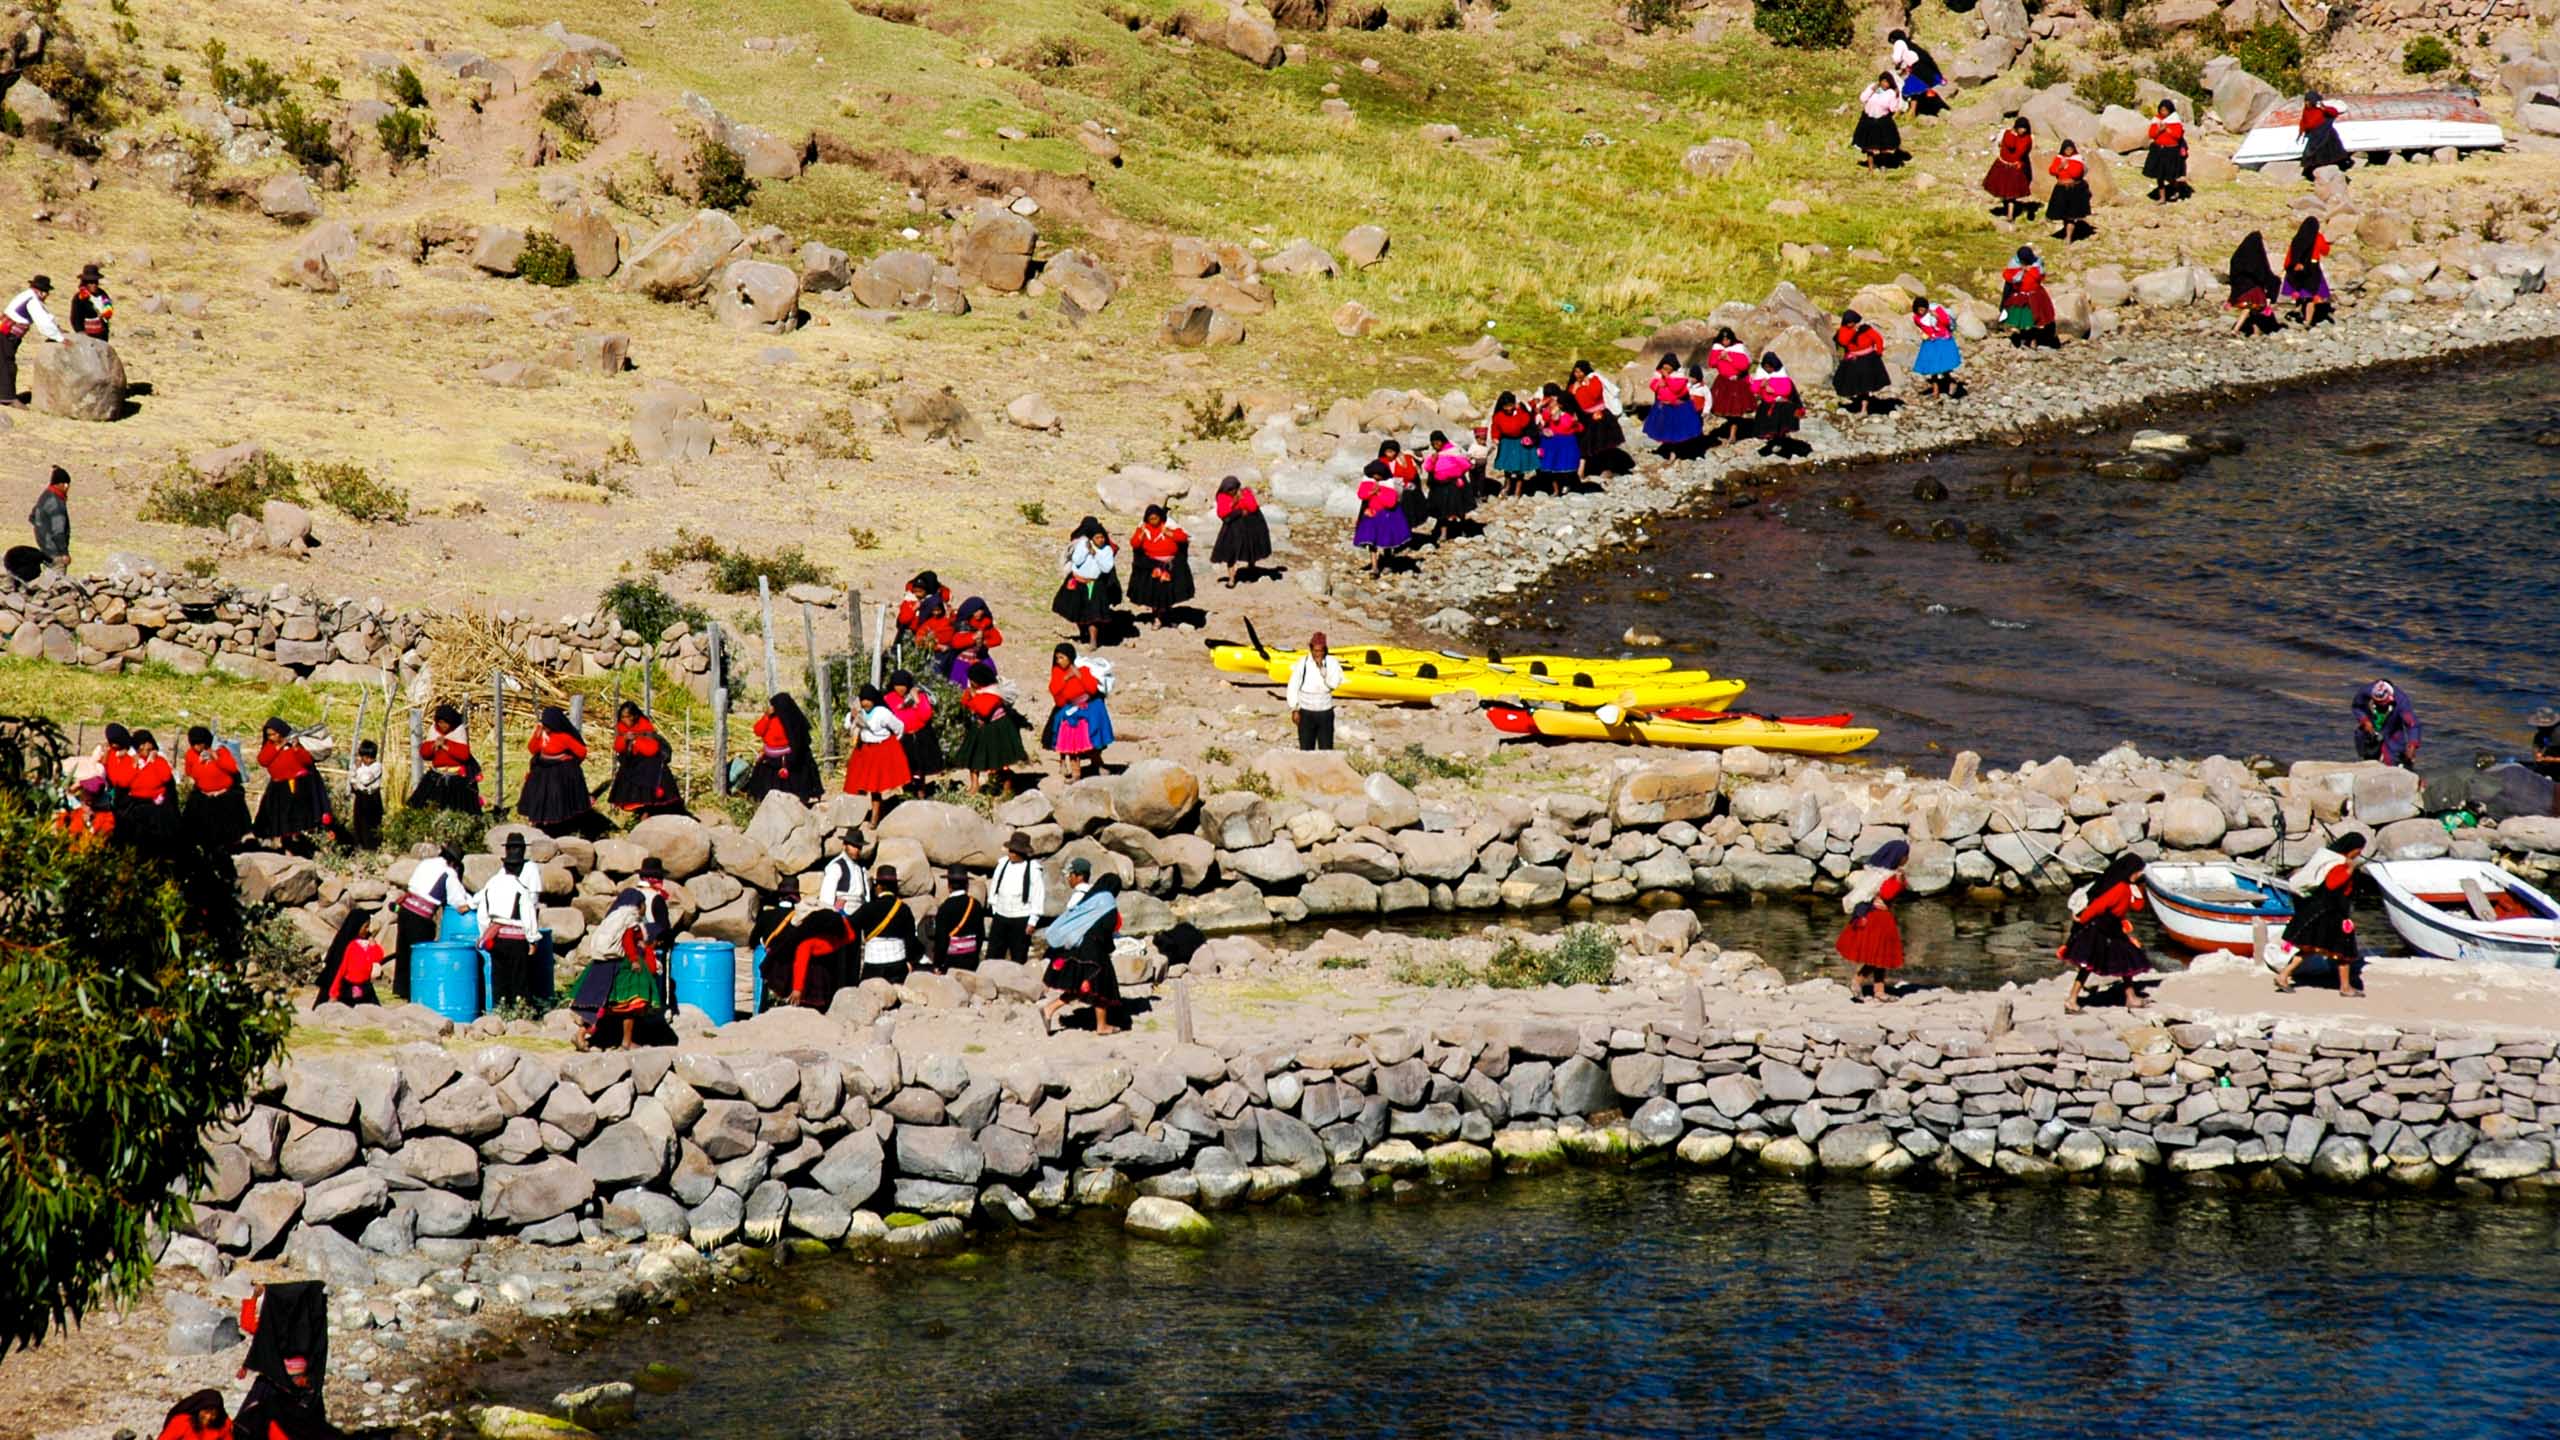 Group gathers around canoes waiting on shore